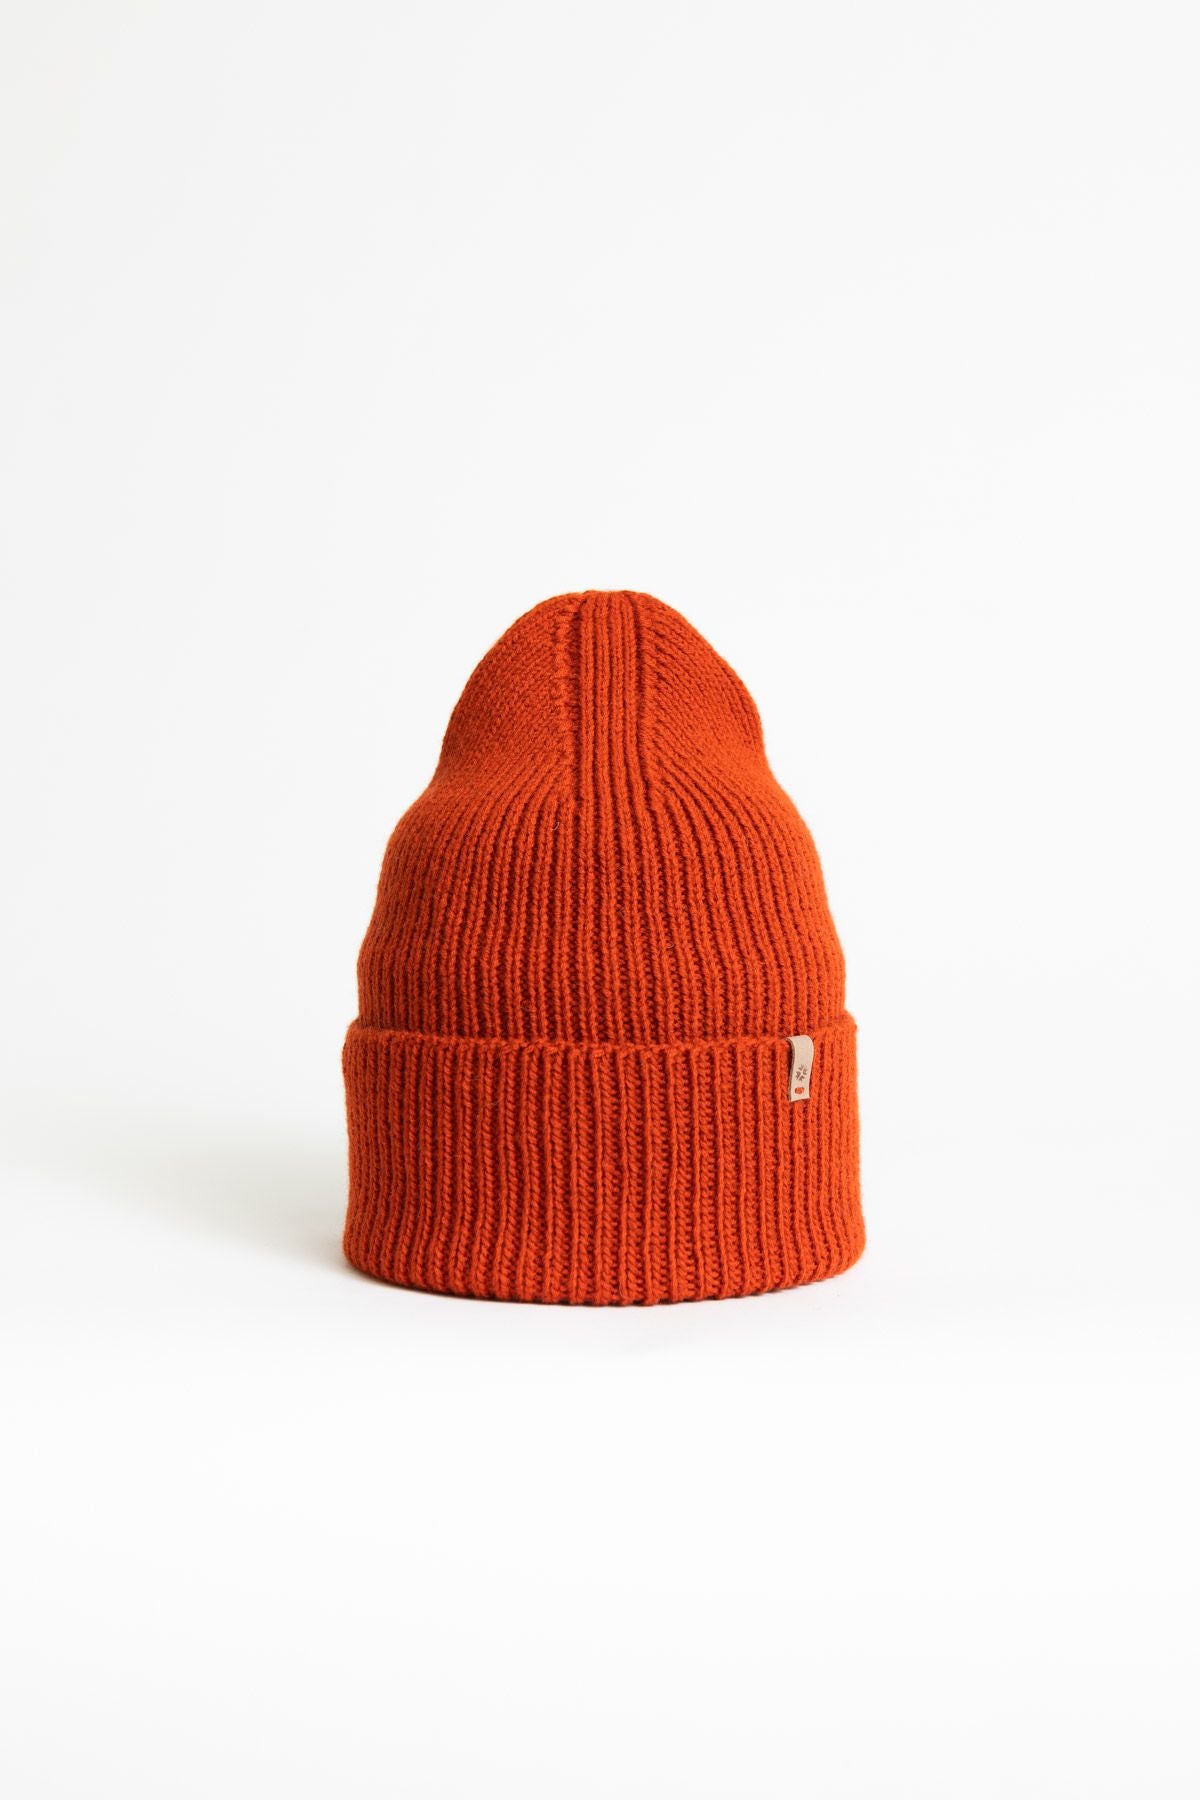 Dinadi Merino Rib Hat in Burnt Orange